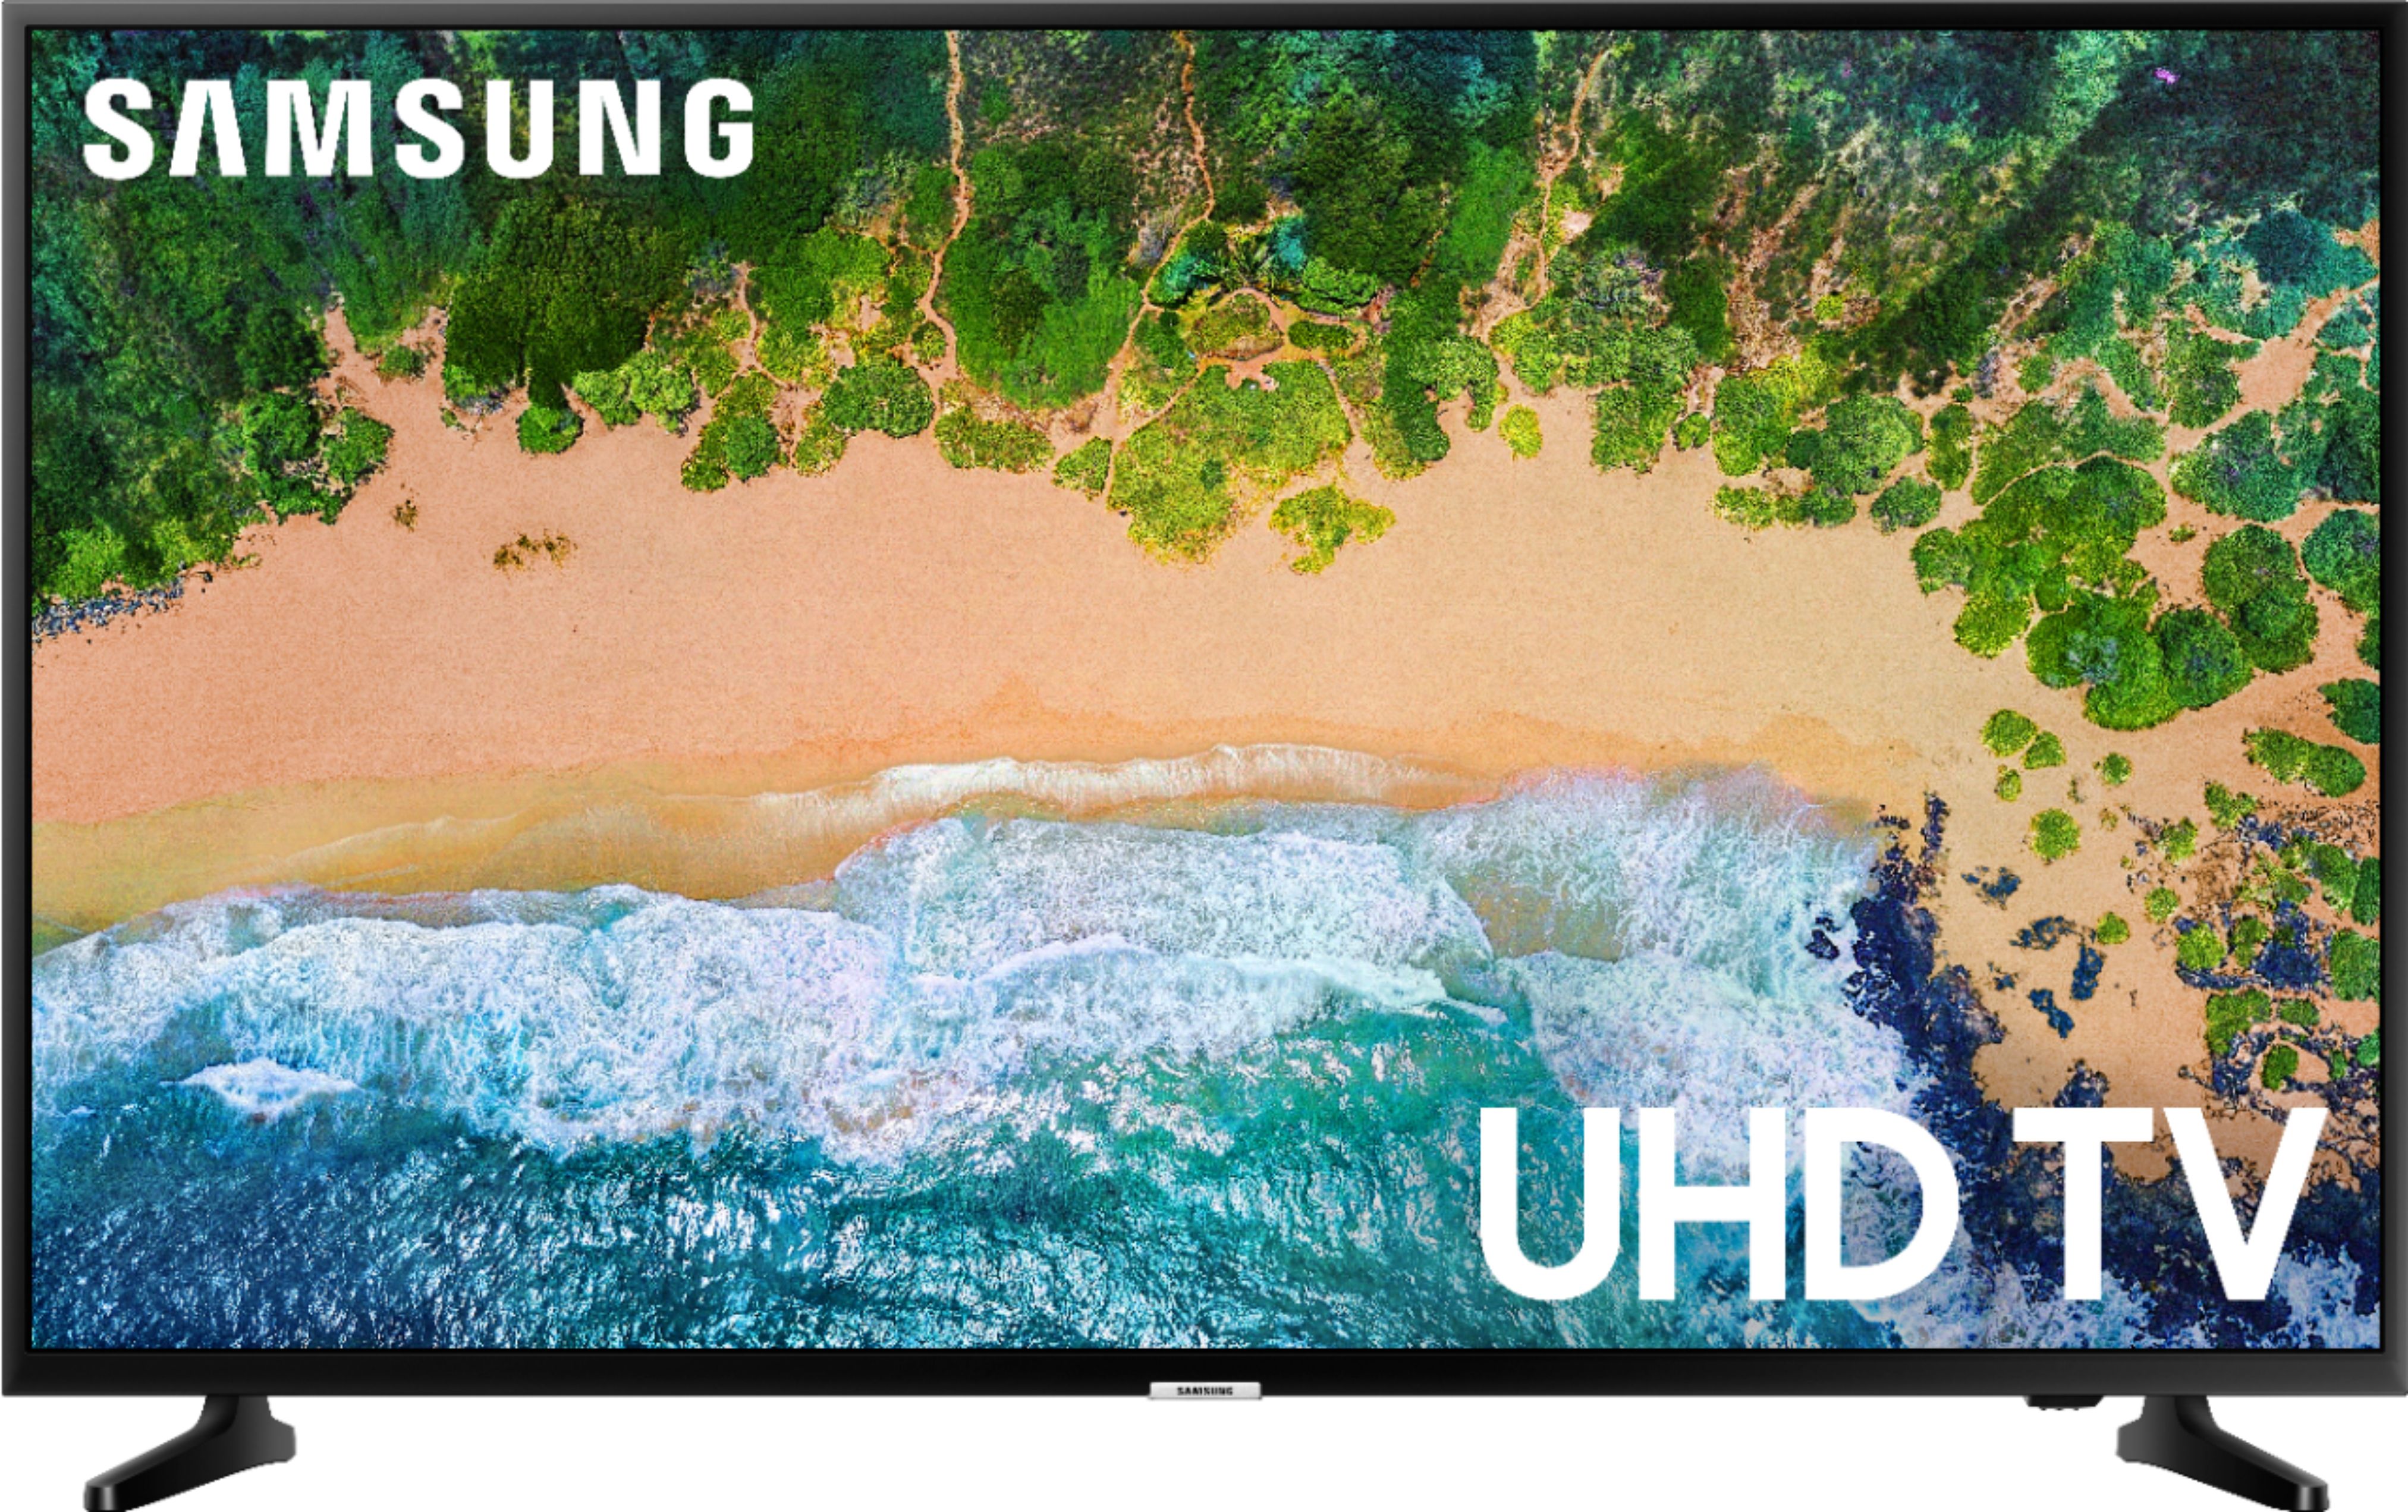 Oriëntatiepunt Deens verbanning Best Buy: Samsung 55" Class 6 Series LED 4K UHD Smart Tizen TV  UN55NU6900FXZA